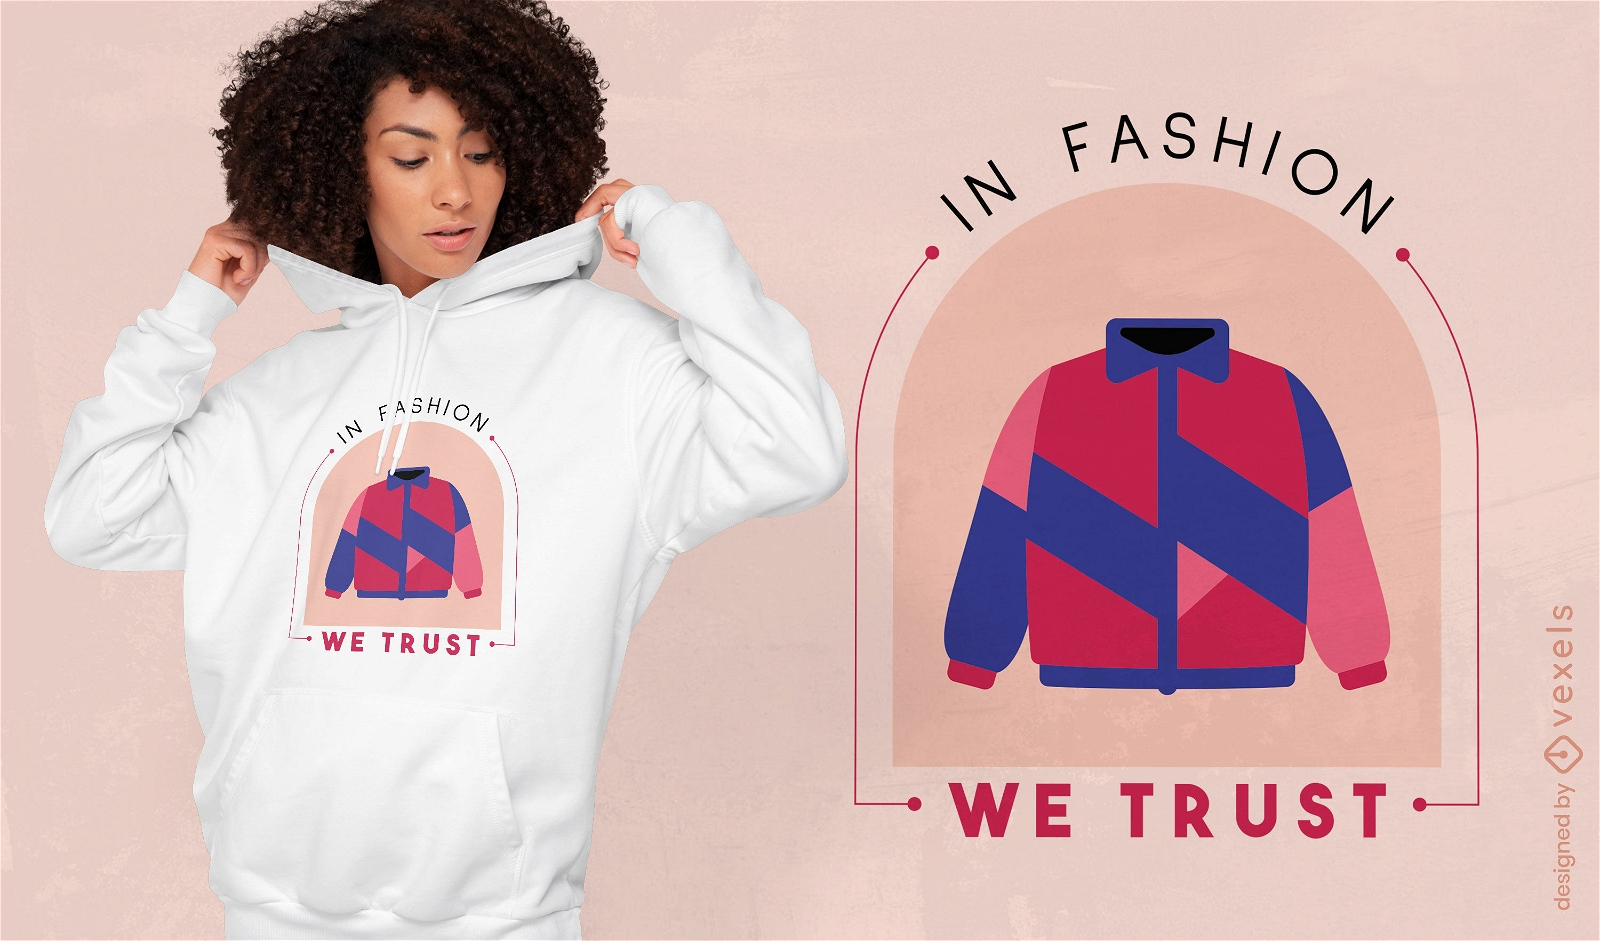 In fashion we trust t-shirt design